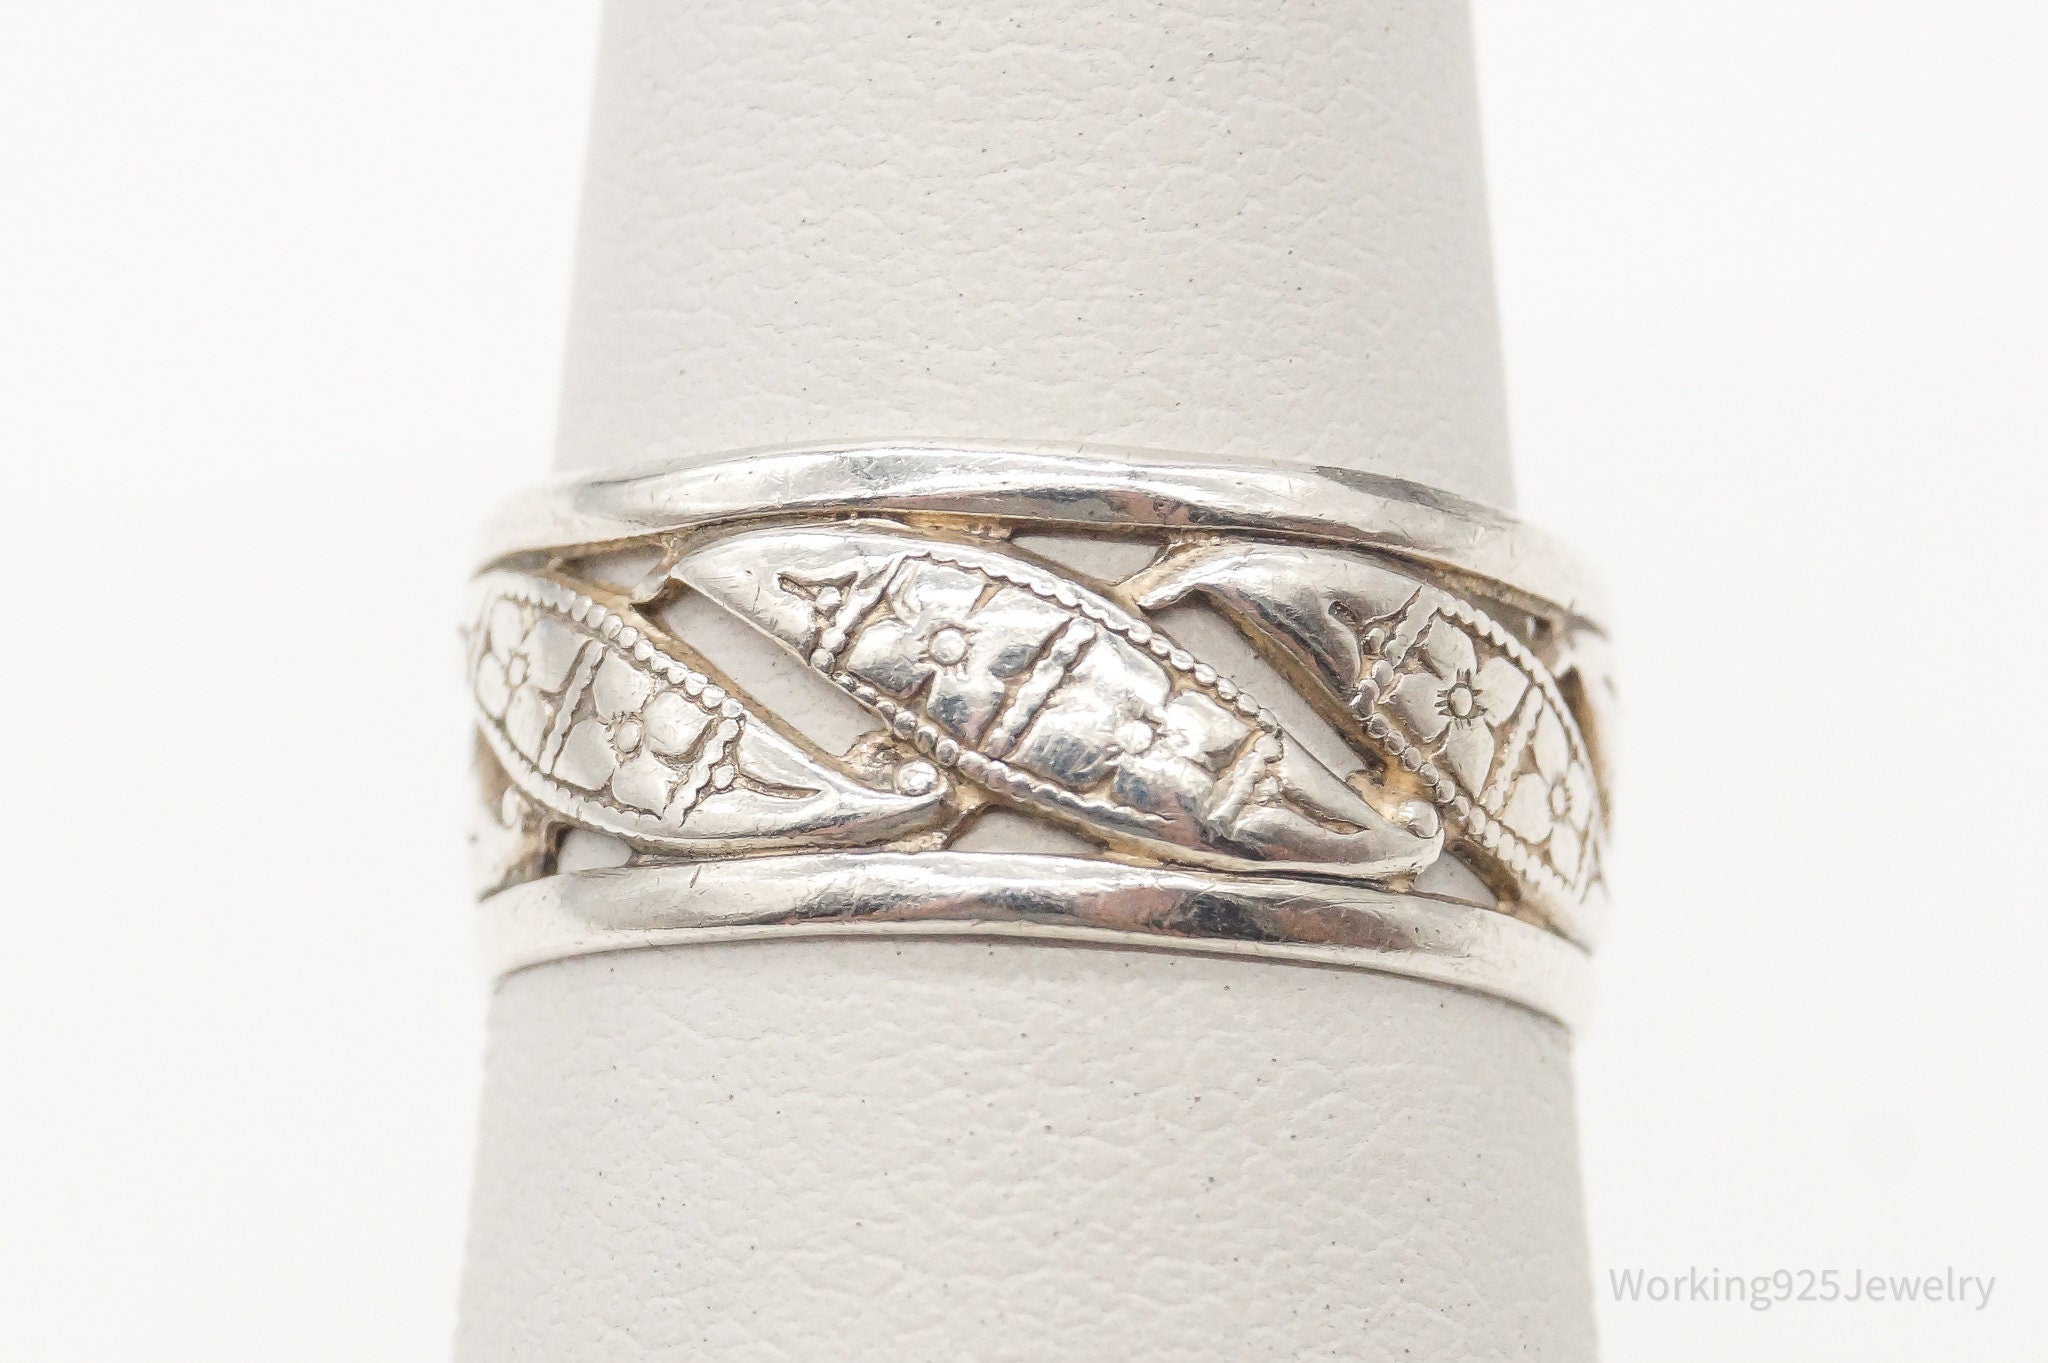 Antique Designer Uncas MFG Co Floral Sterling Silver Band Ring - Size 6.5